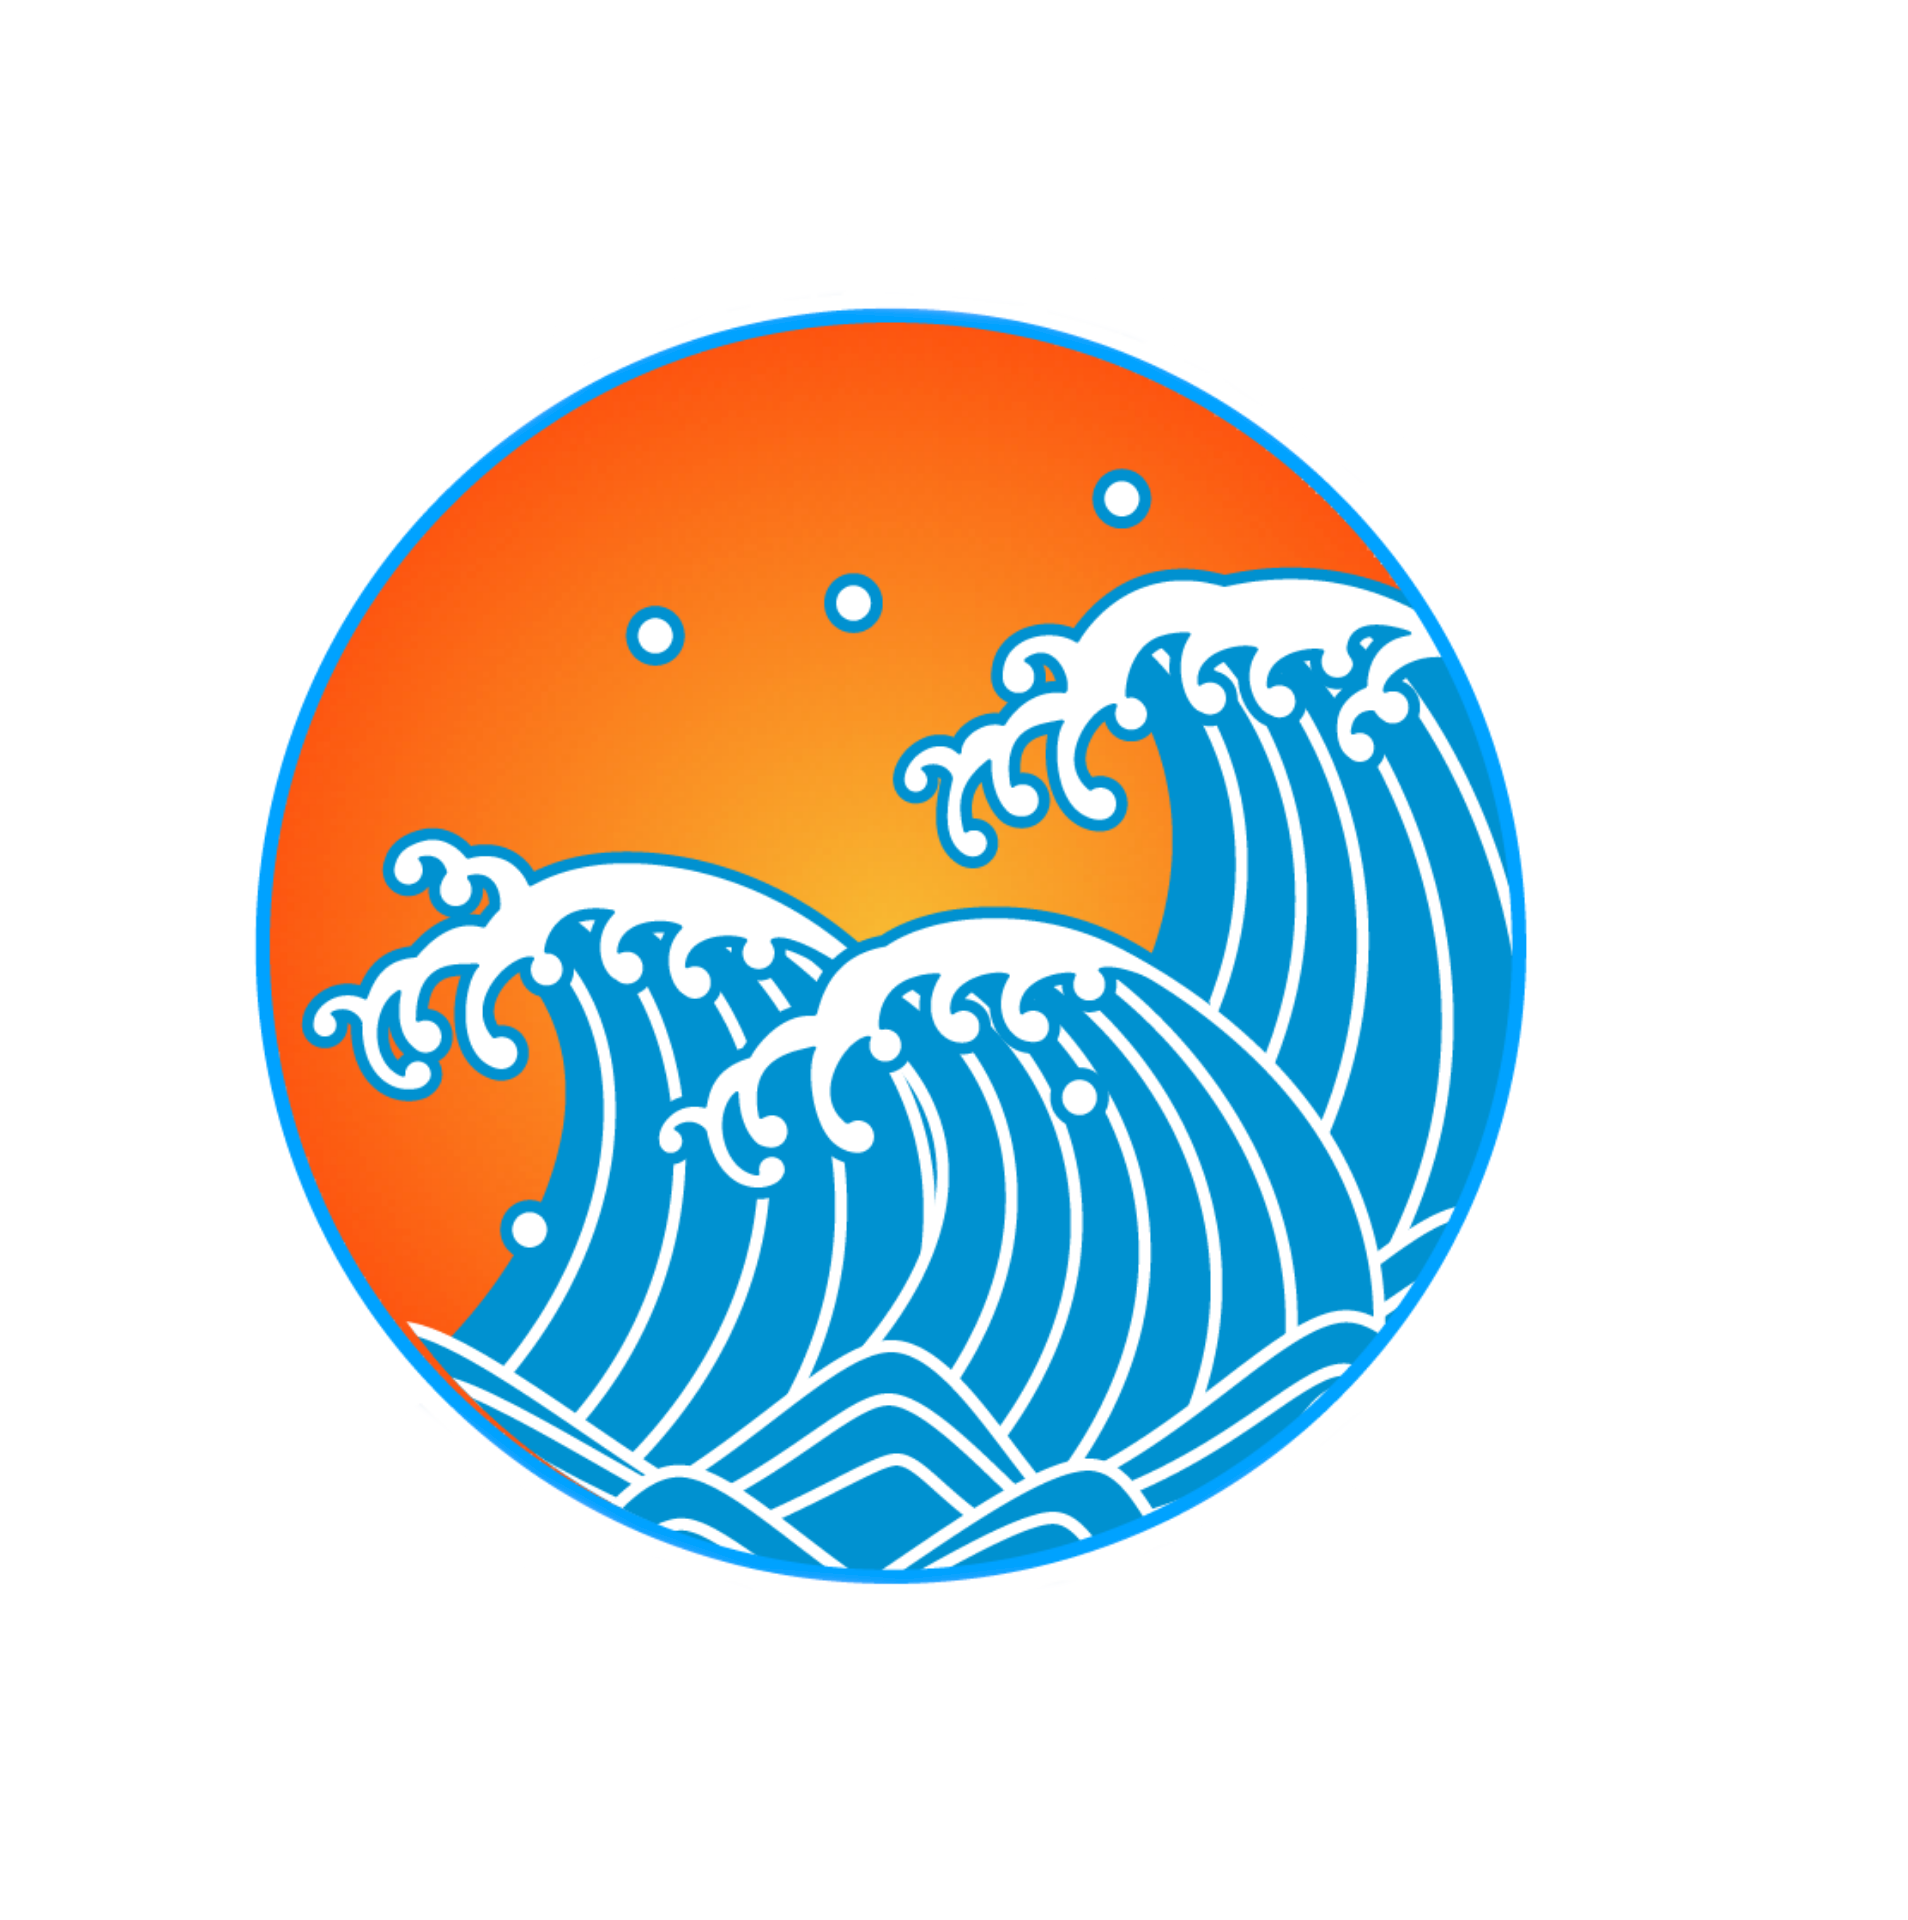 Laguna Beach Democratic Club